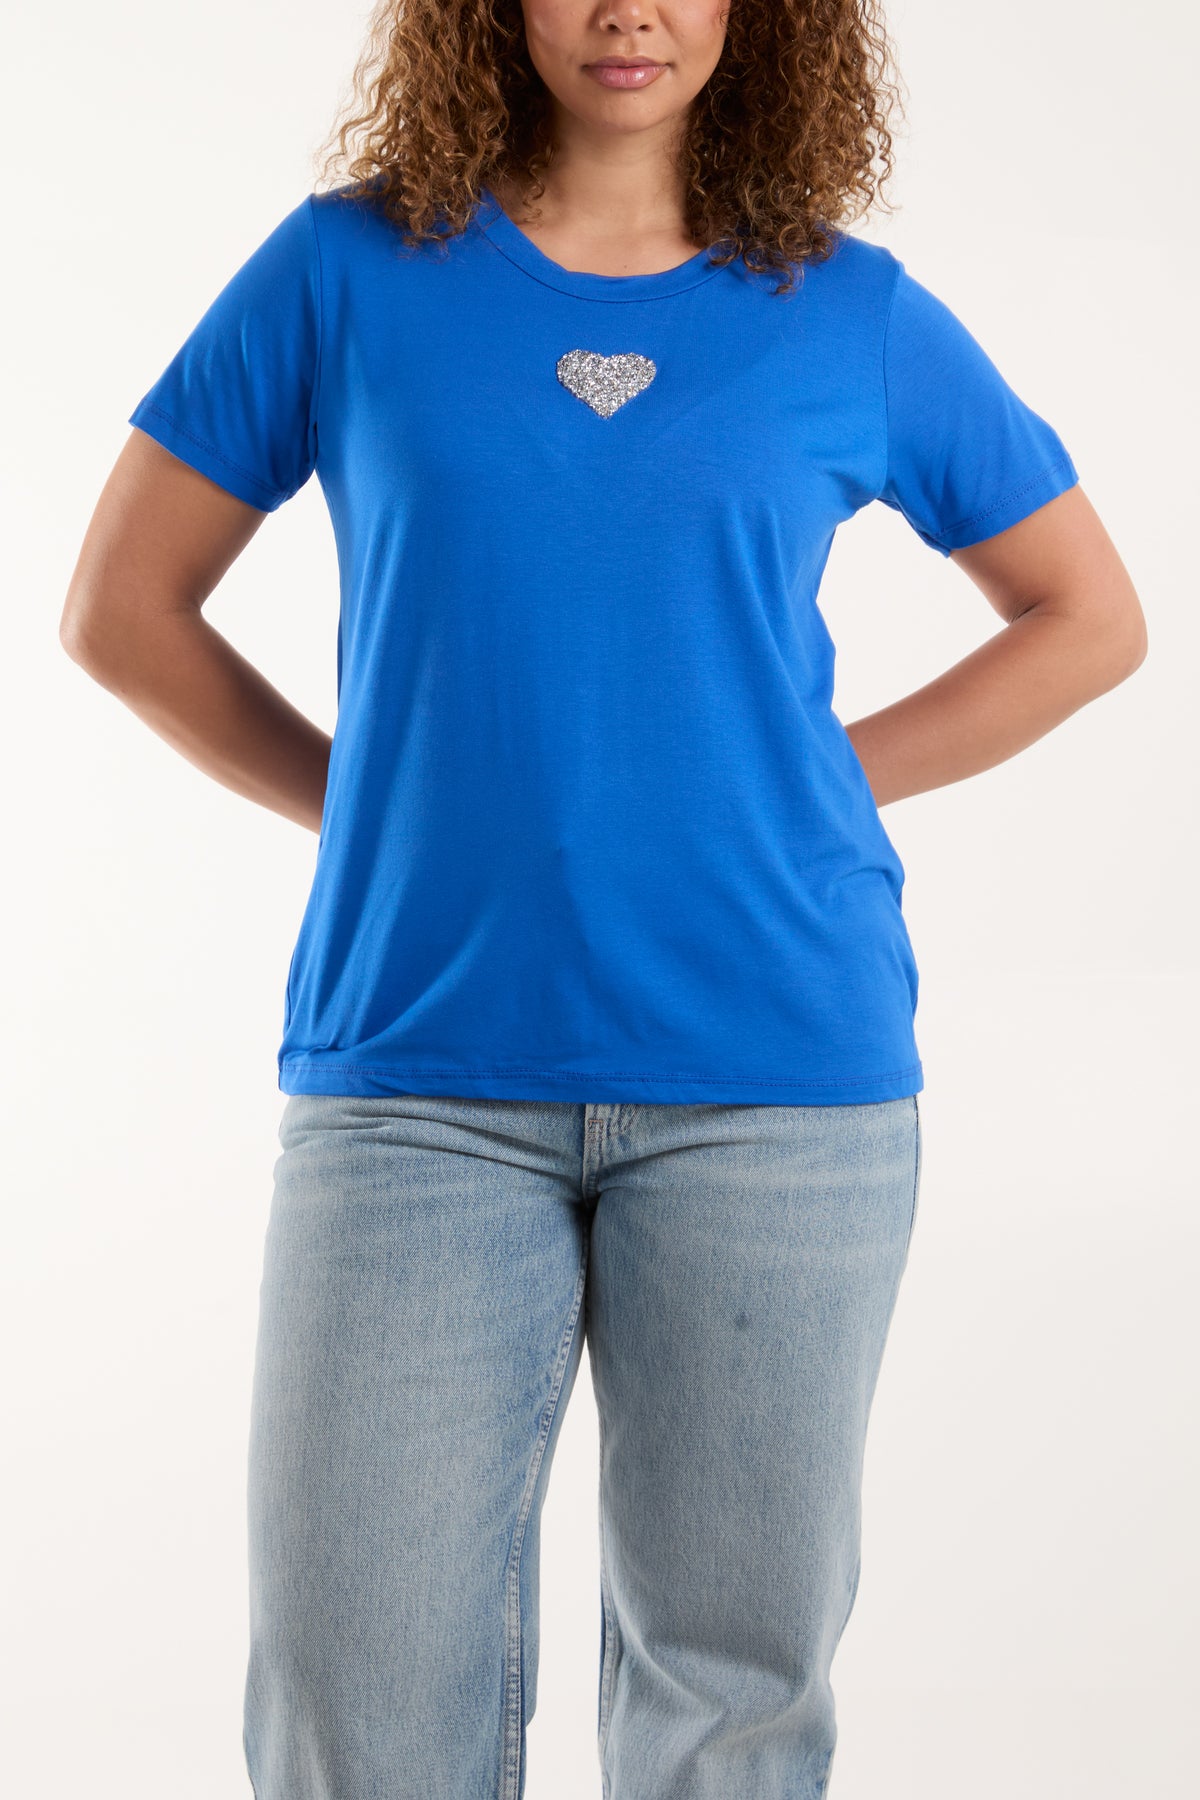 Appliqued Diamante Heart T-Shirt